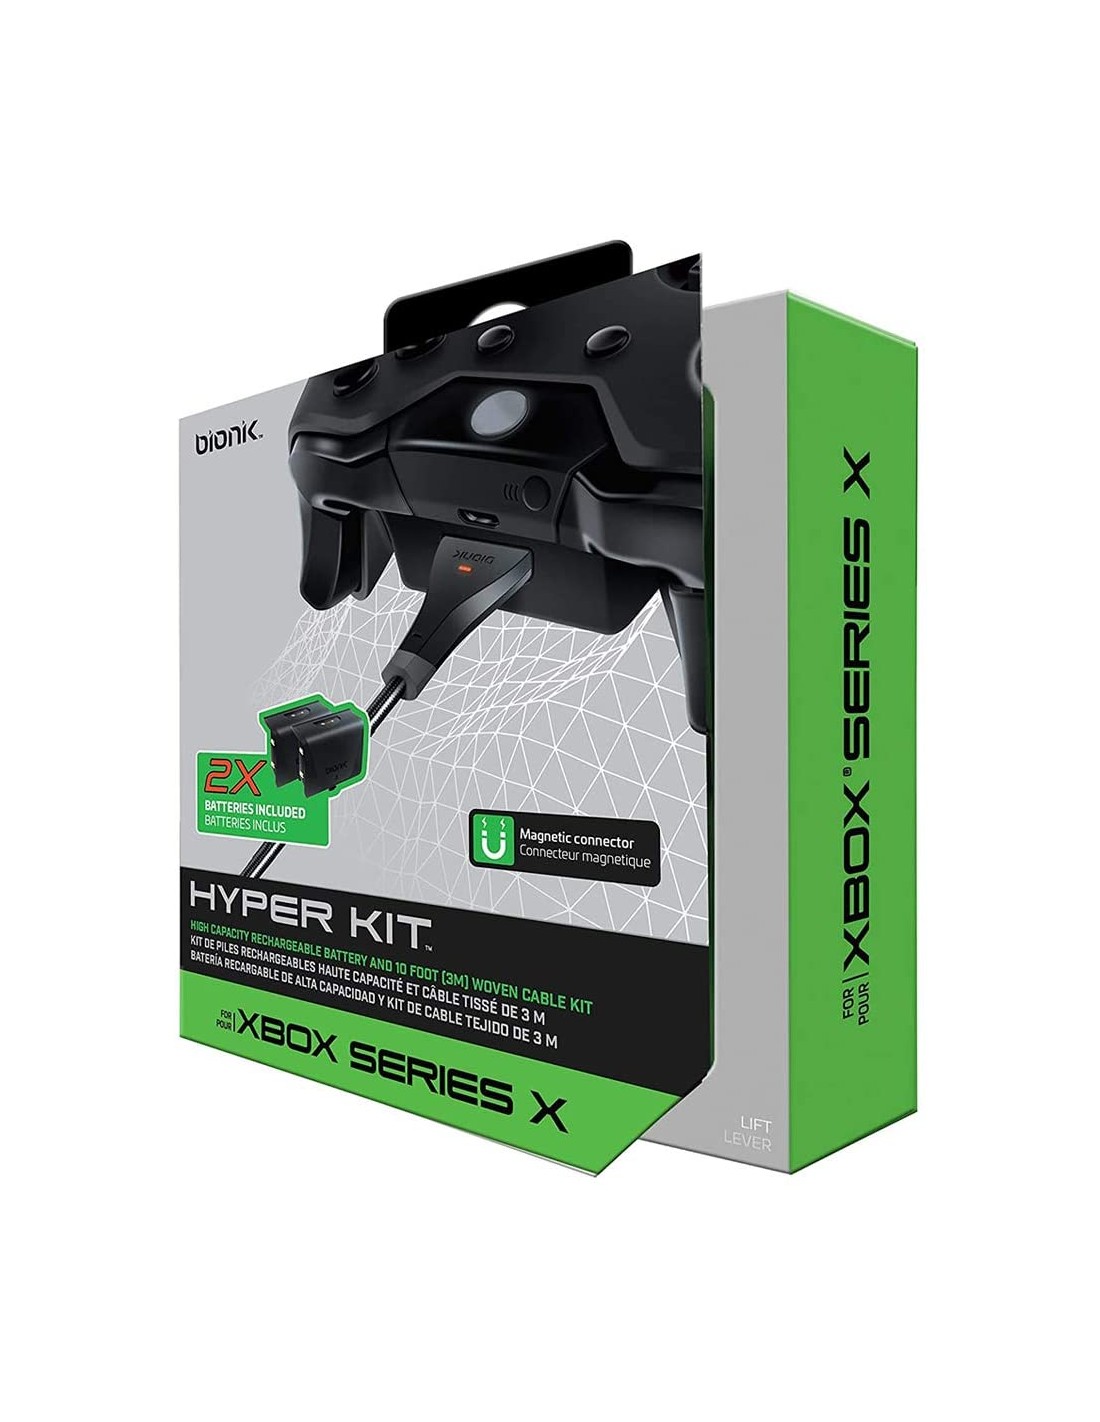 microscopio Cambiable galería Xbox Series X - Hyper Kit X (2x 1200 mAh bats + Cable 3m)